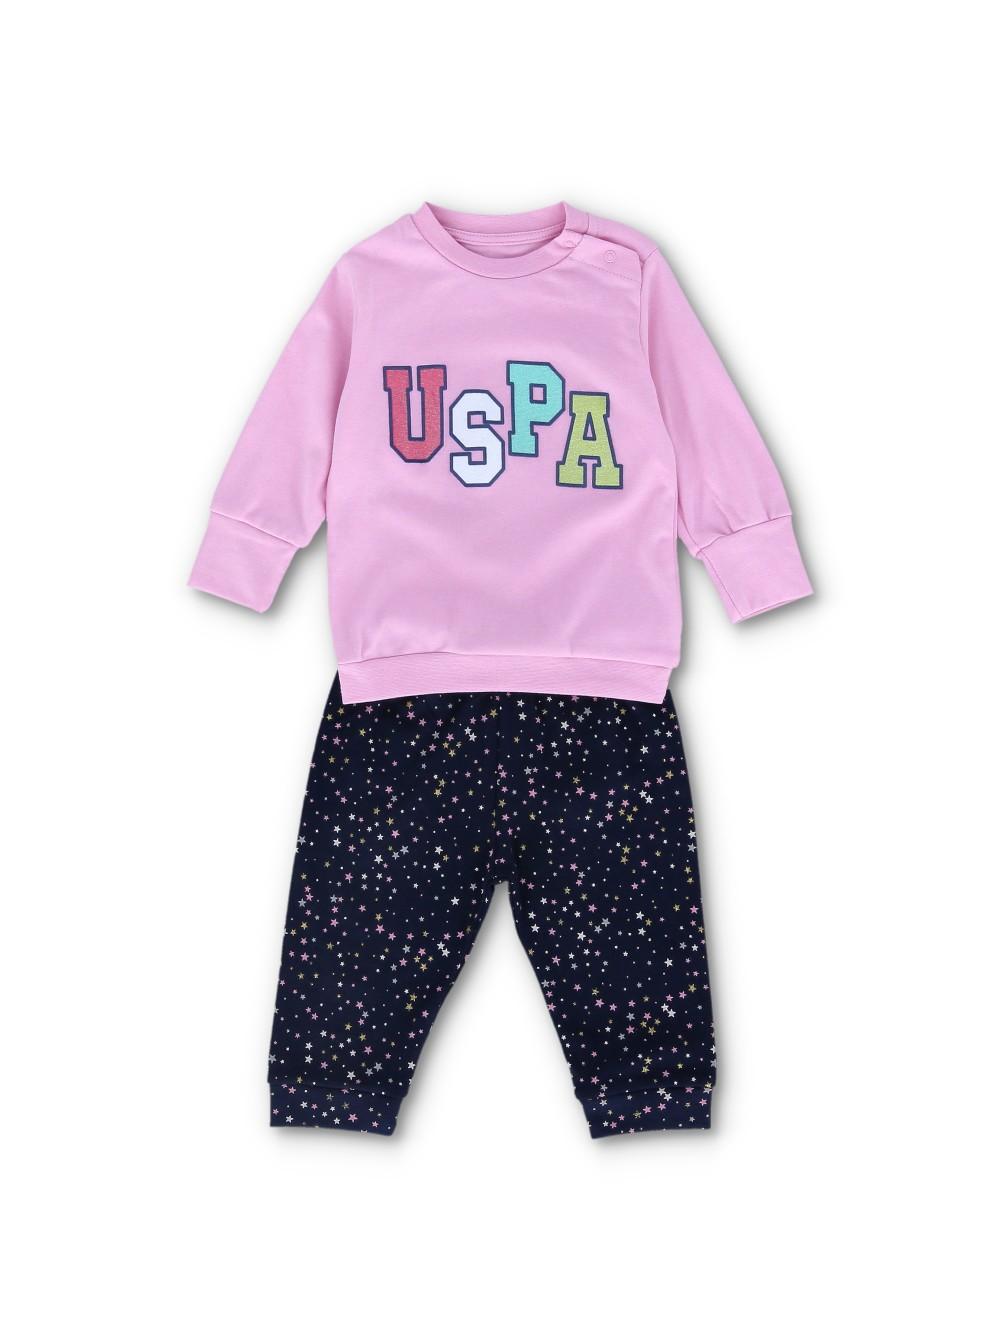 Selected image for U.S. POLO ASSN. Komplet za bebe roze